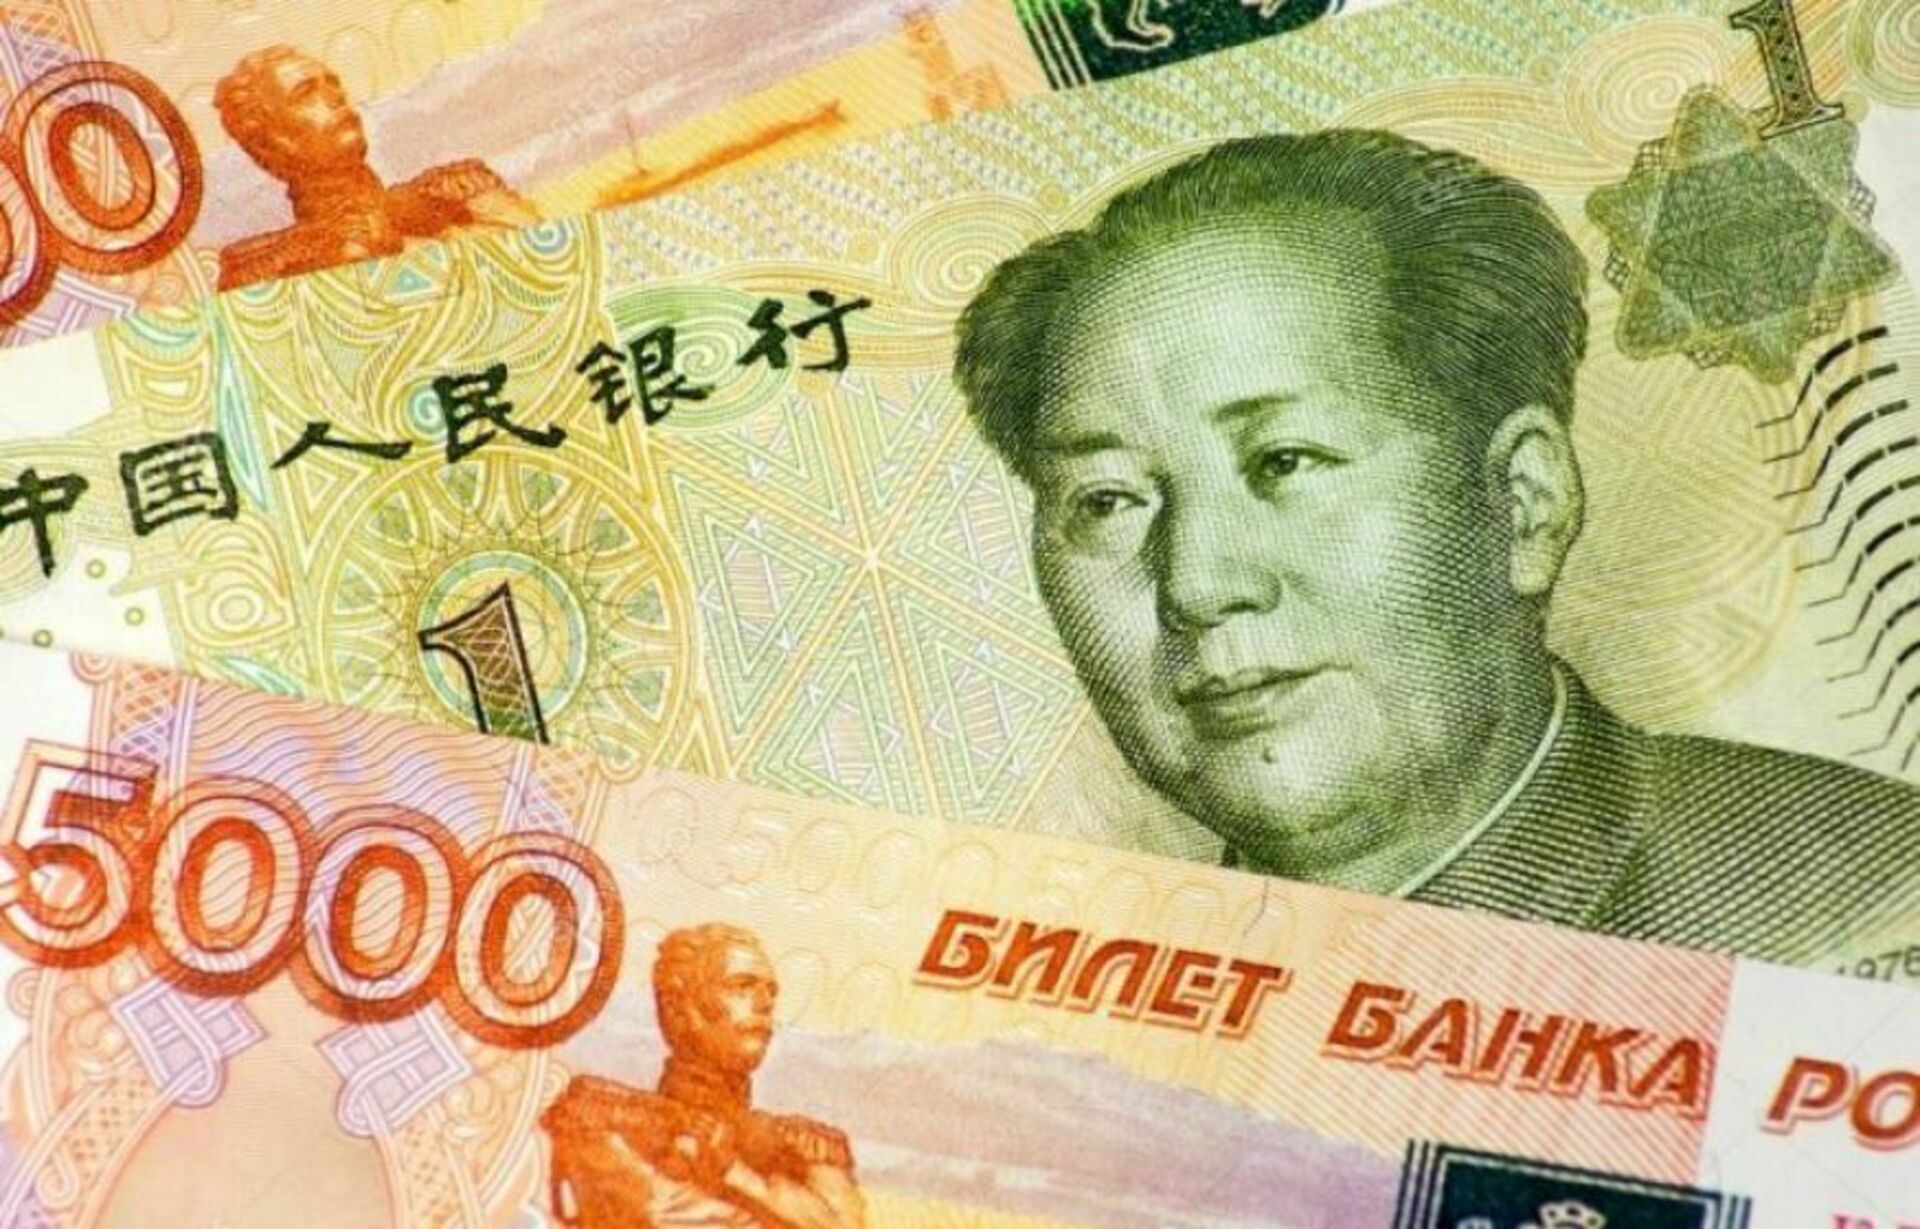 New currency. Юани в рубли. Валюта Китая. Китайский юань. Национальная валюта Китая.